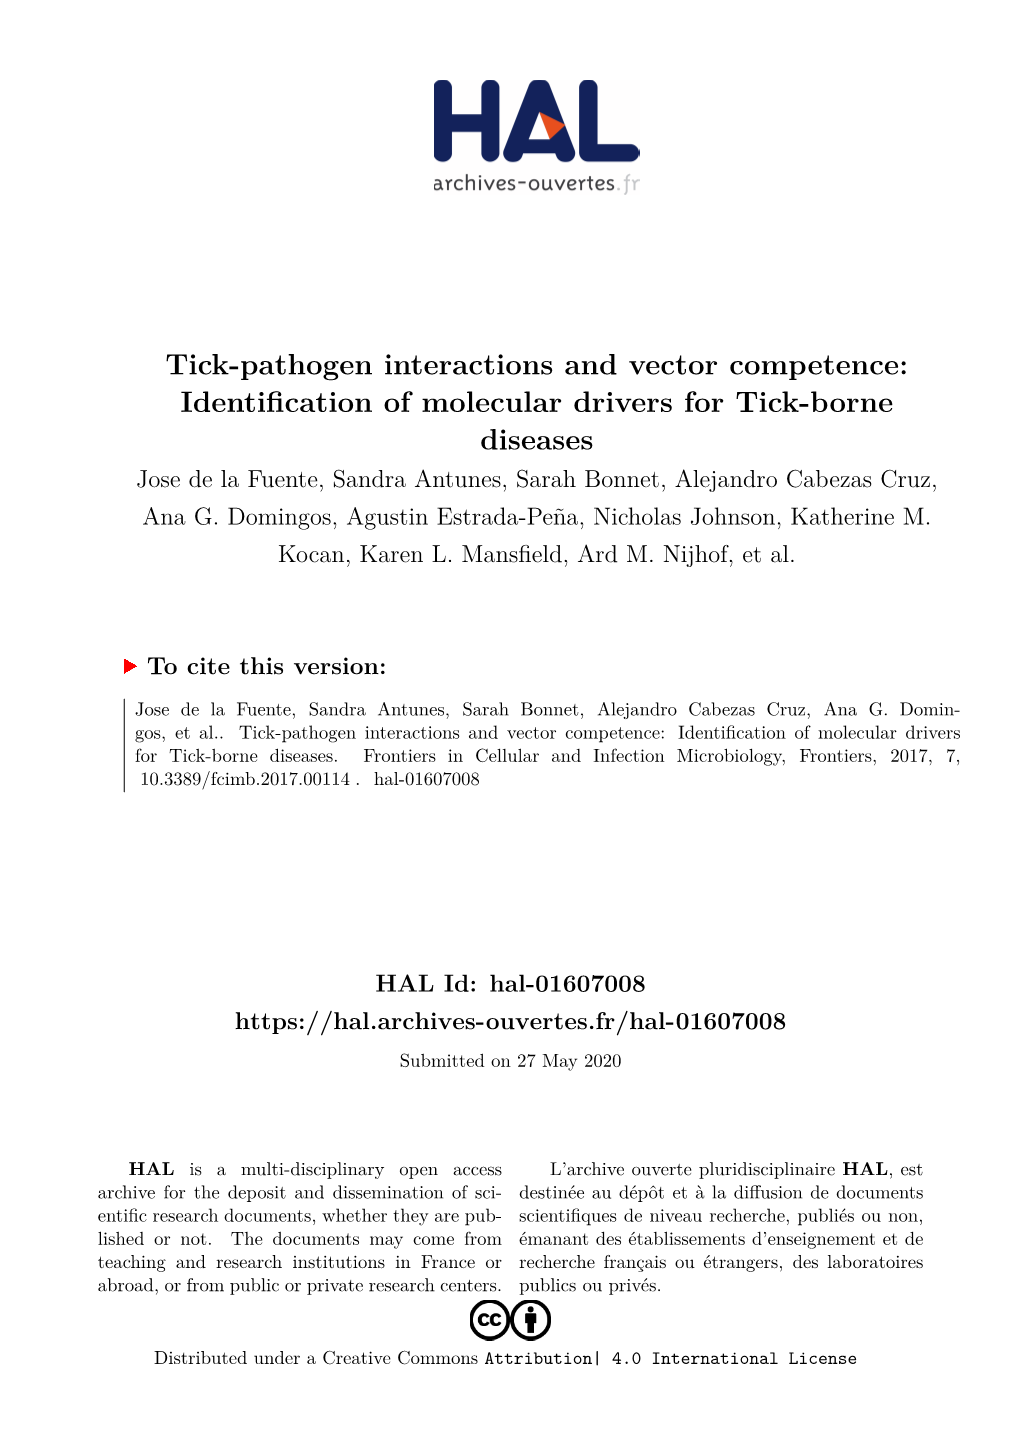 Identification of Molecular Drivers for Tick-Borne Diseases Jose De La Fuente, Sandra Antunes, Sarah Bonnet, Alejandro Cabezas Cruz, Ana G